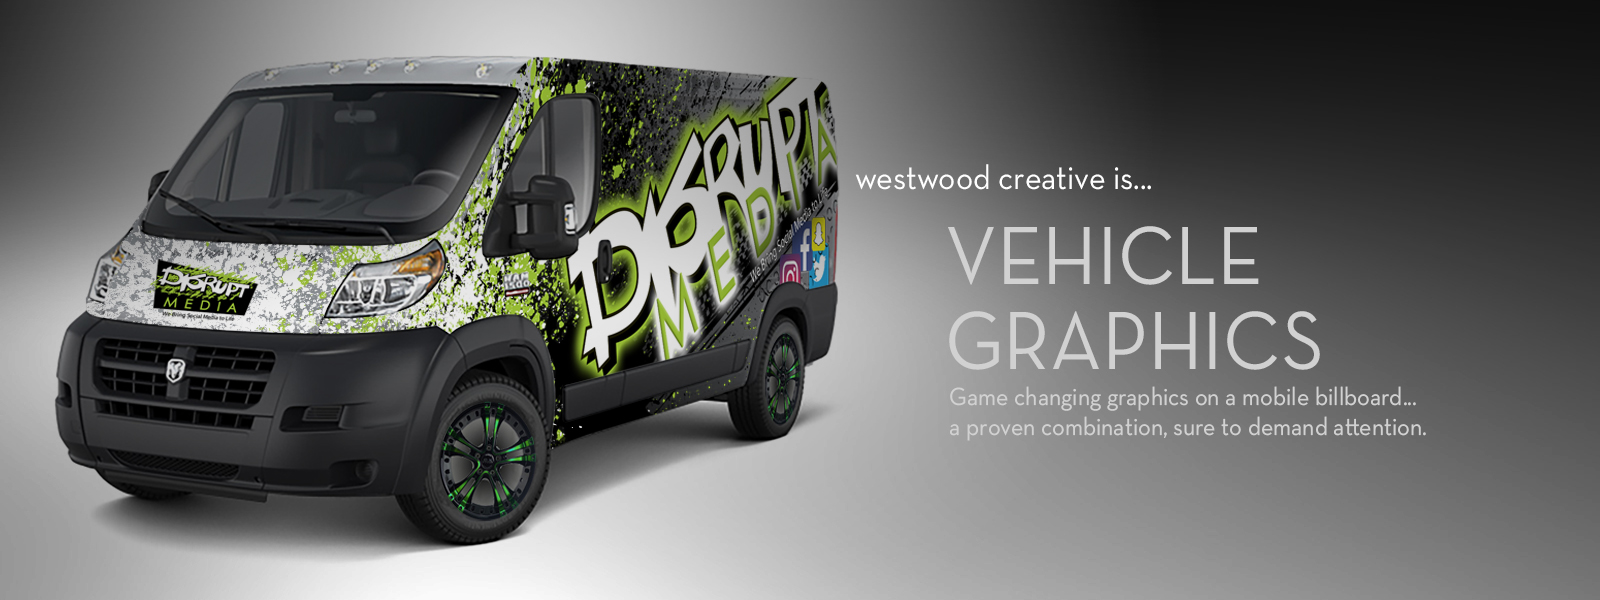 westwood creative Vehicle Graphics